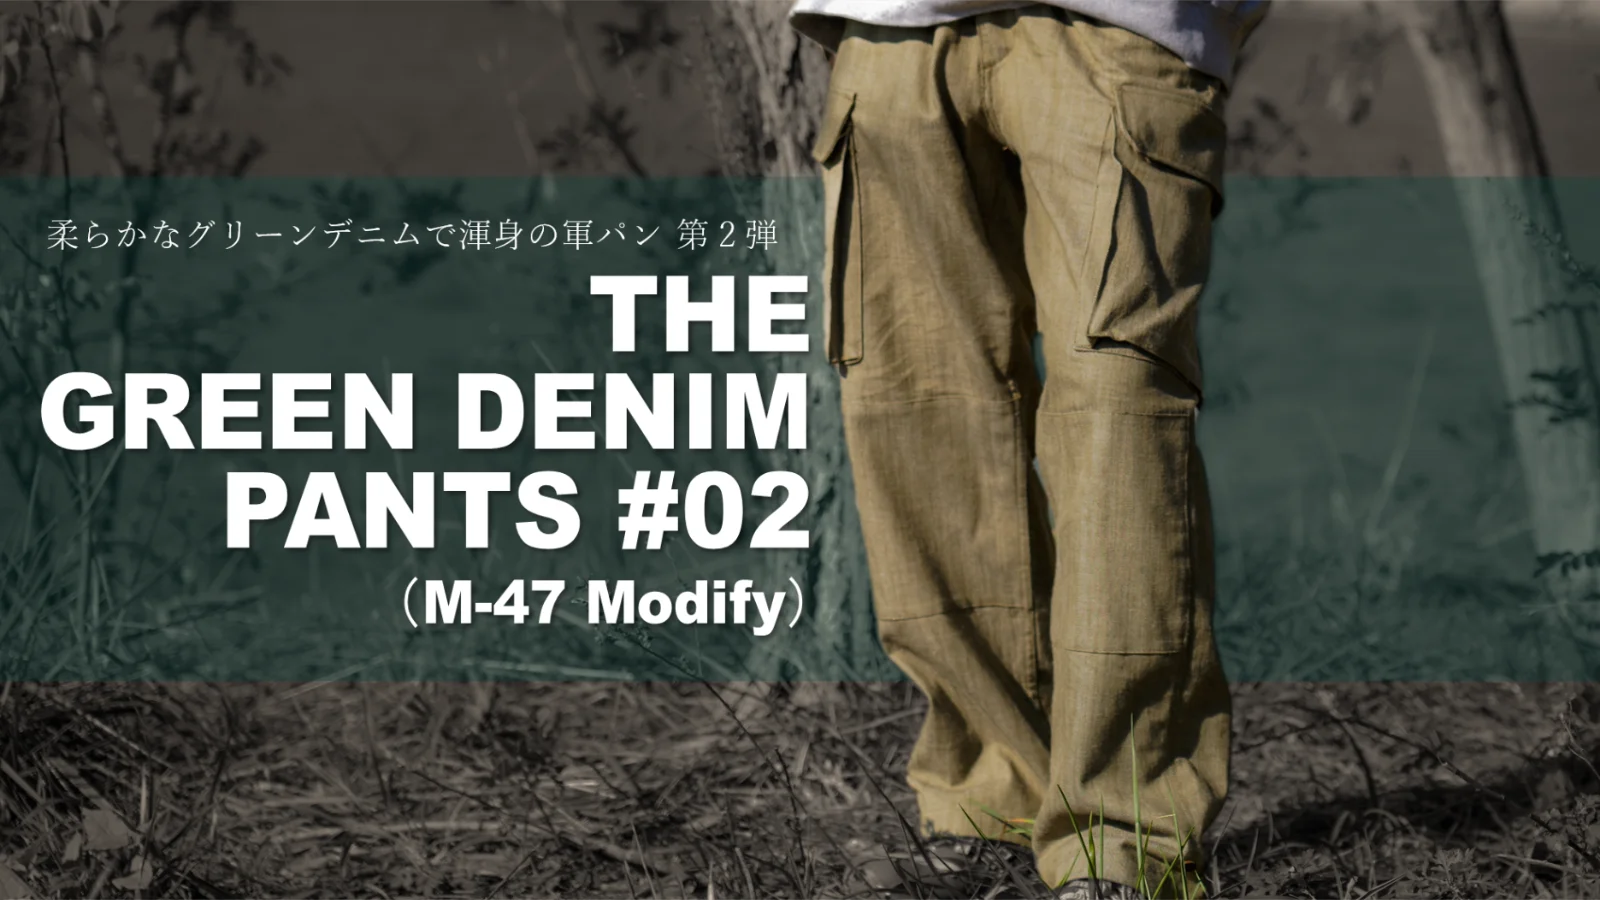 THE GREEN DENIM PANTS #02